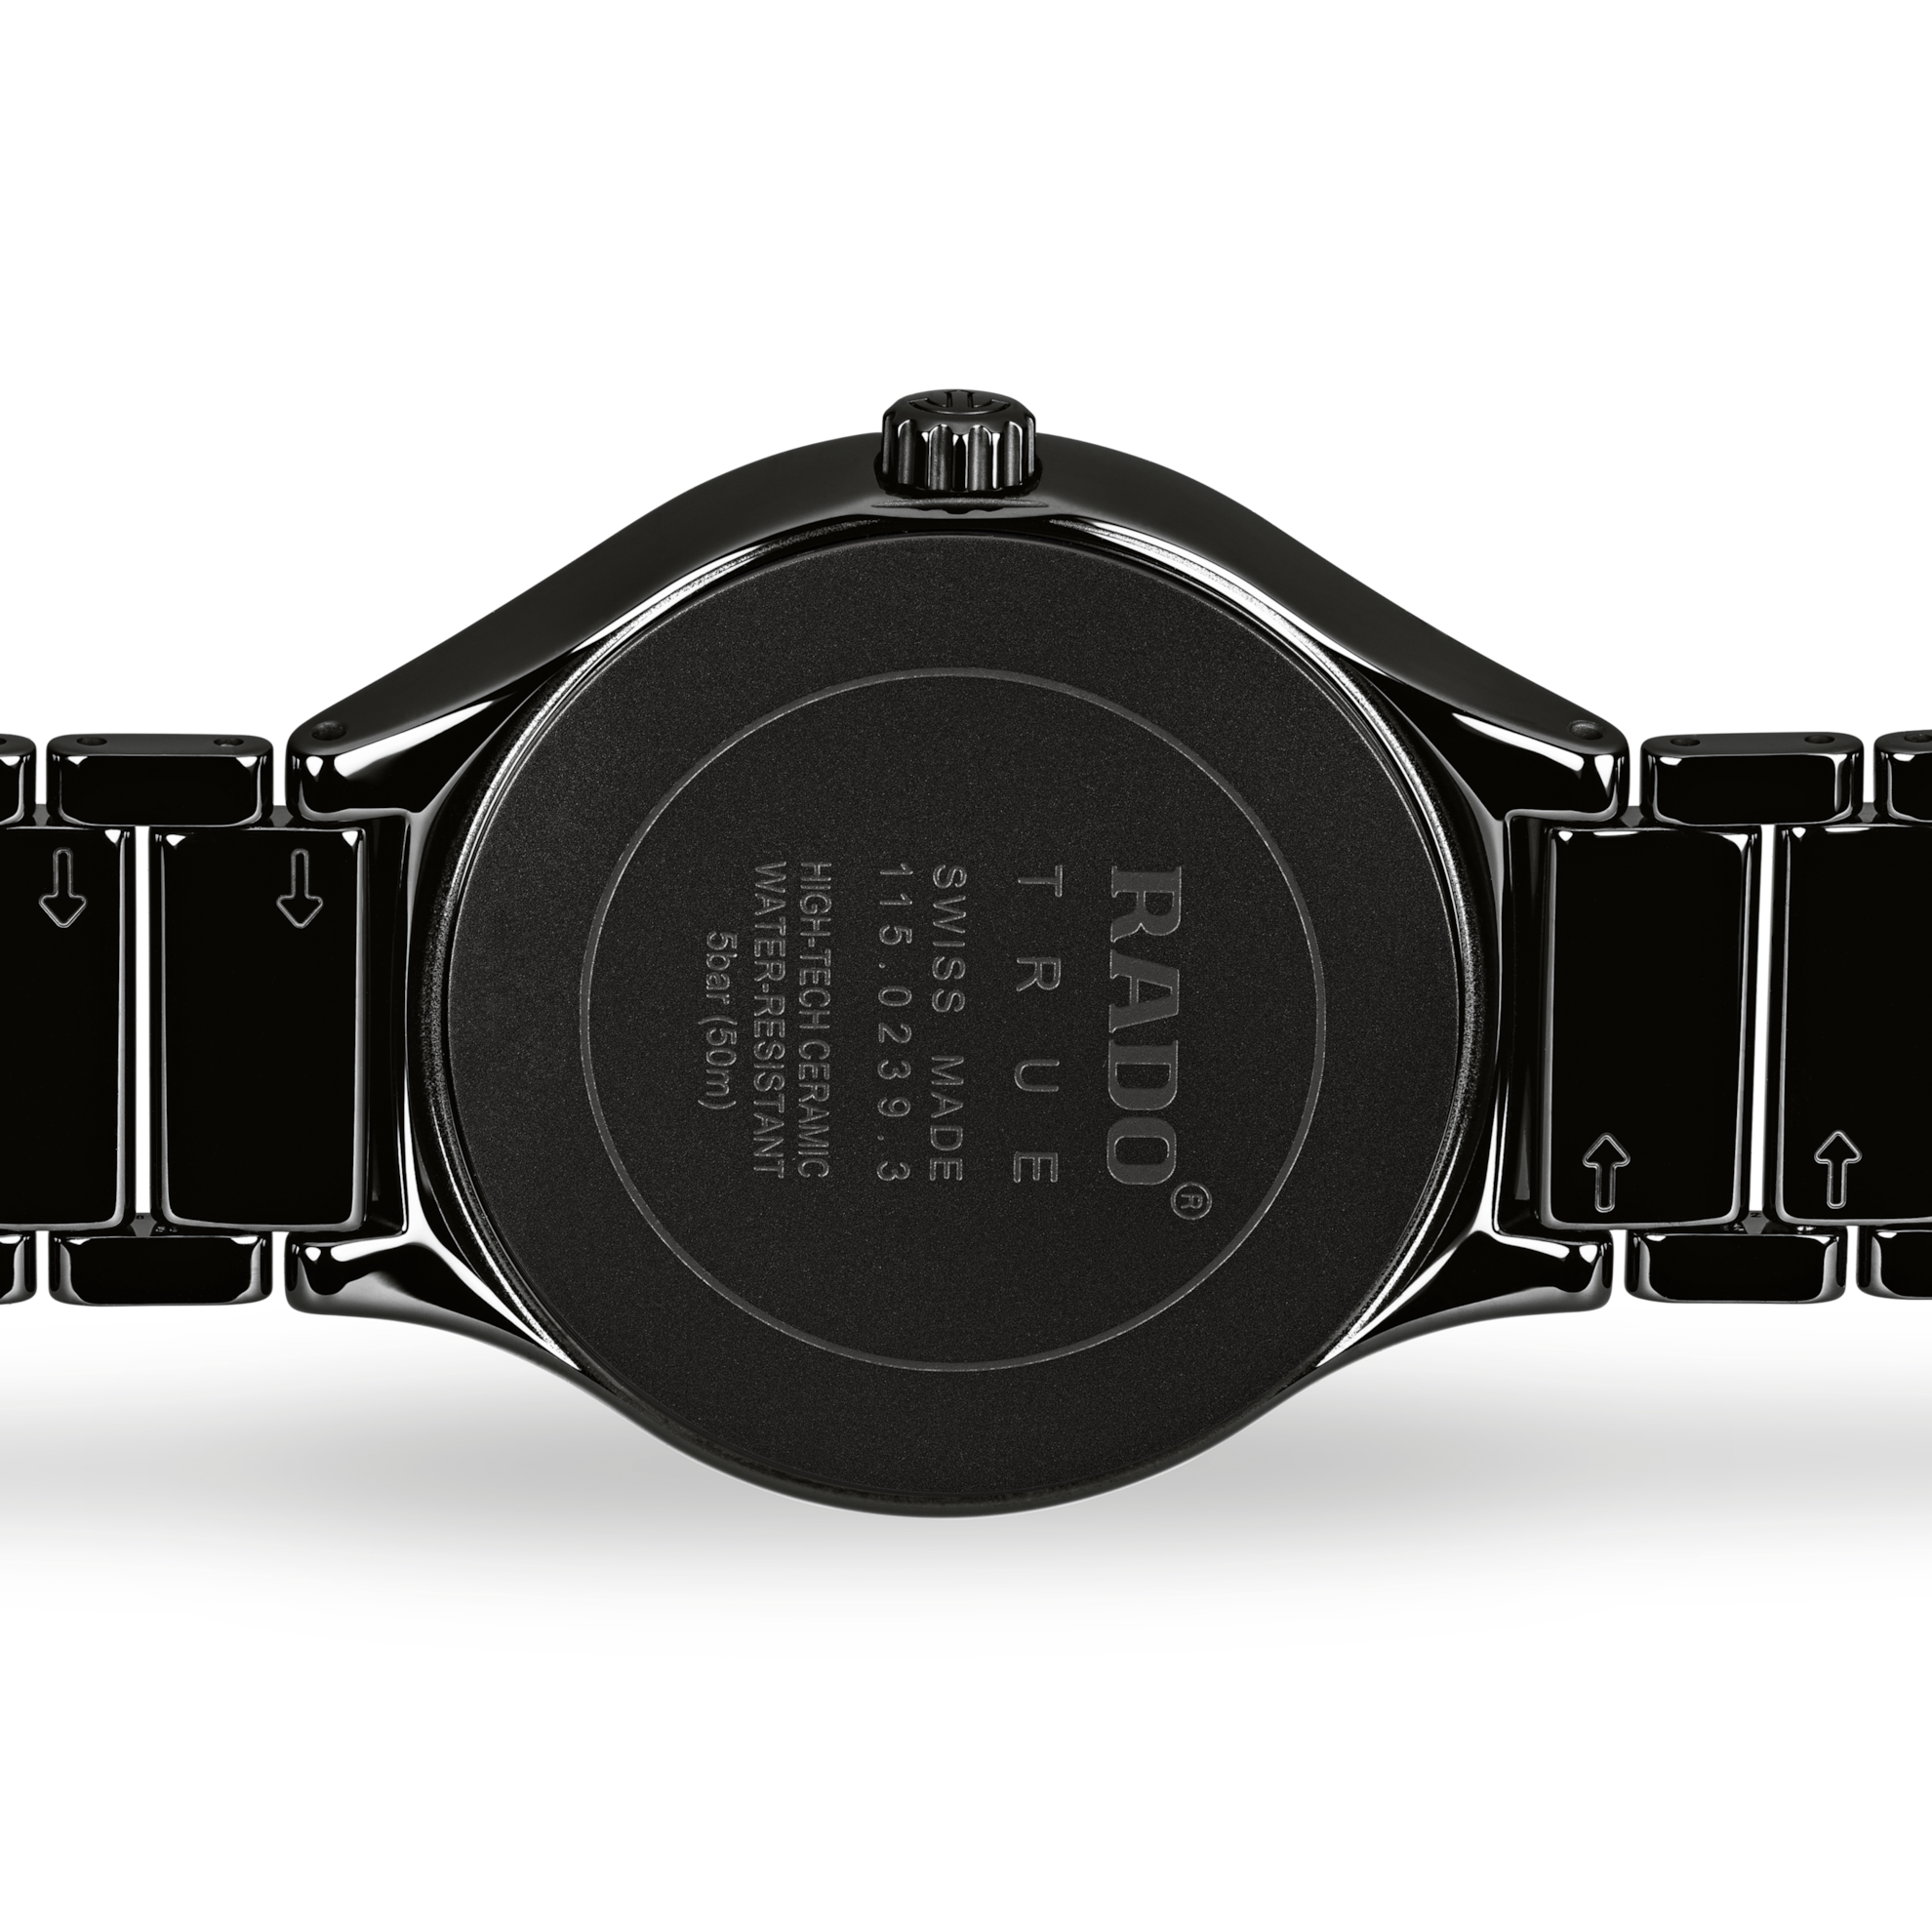 Rado True Quartz Watch R27238162 - Kamal Watch Company